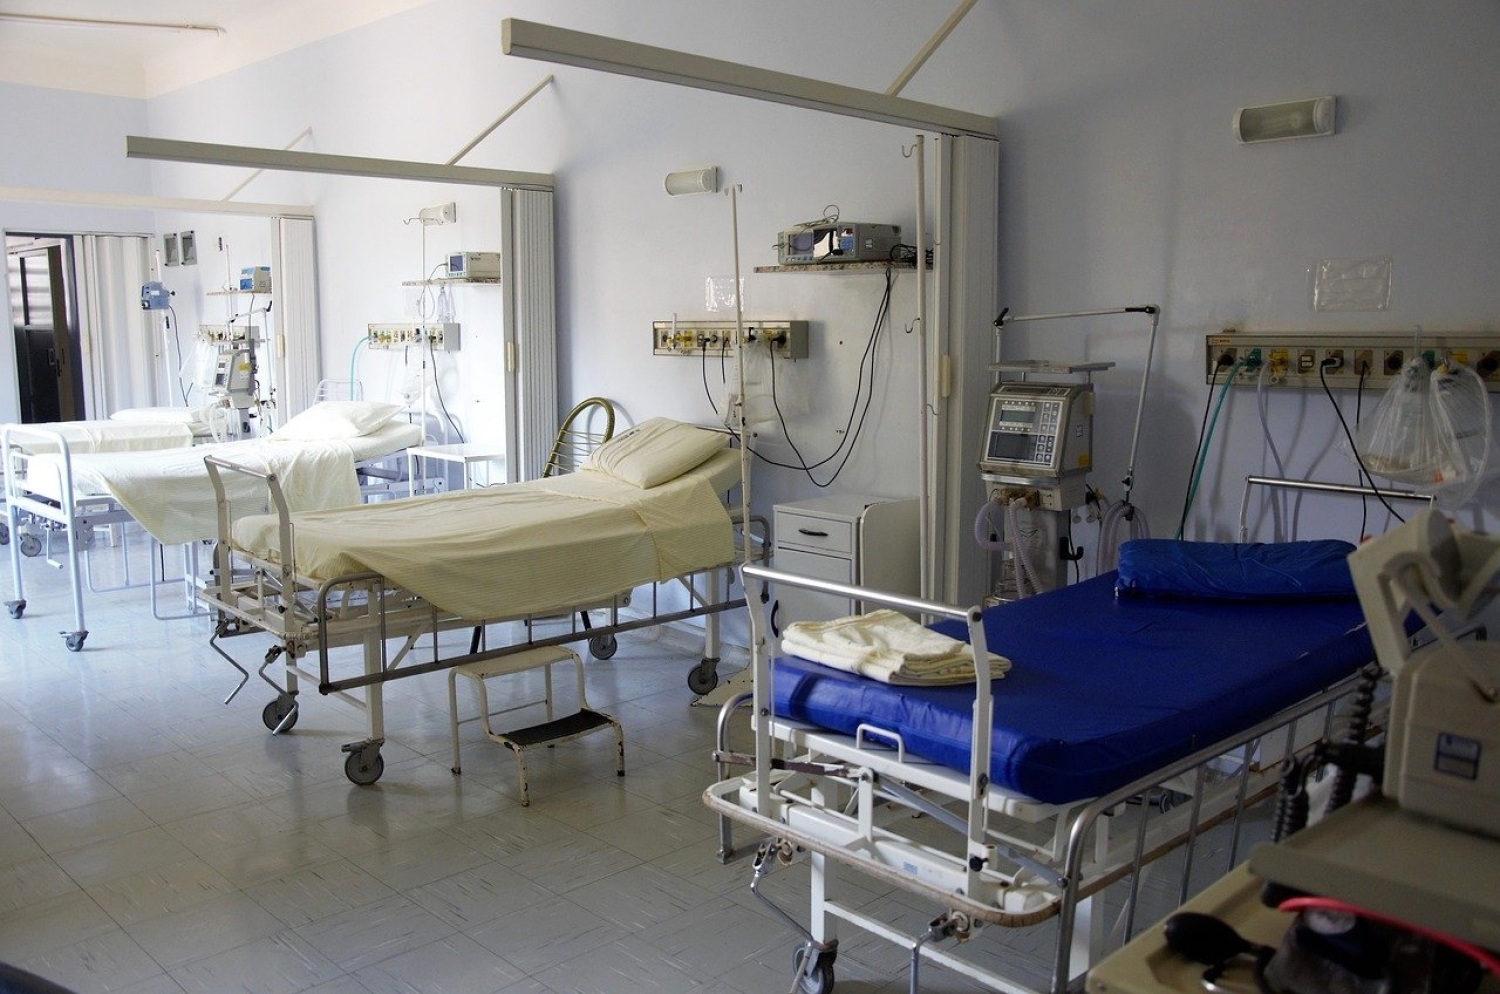 Saudi Arabia needs 20,000 extra hospital beds by 2030 amid growing population